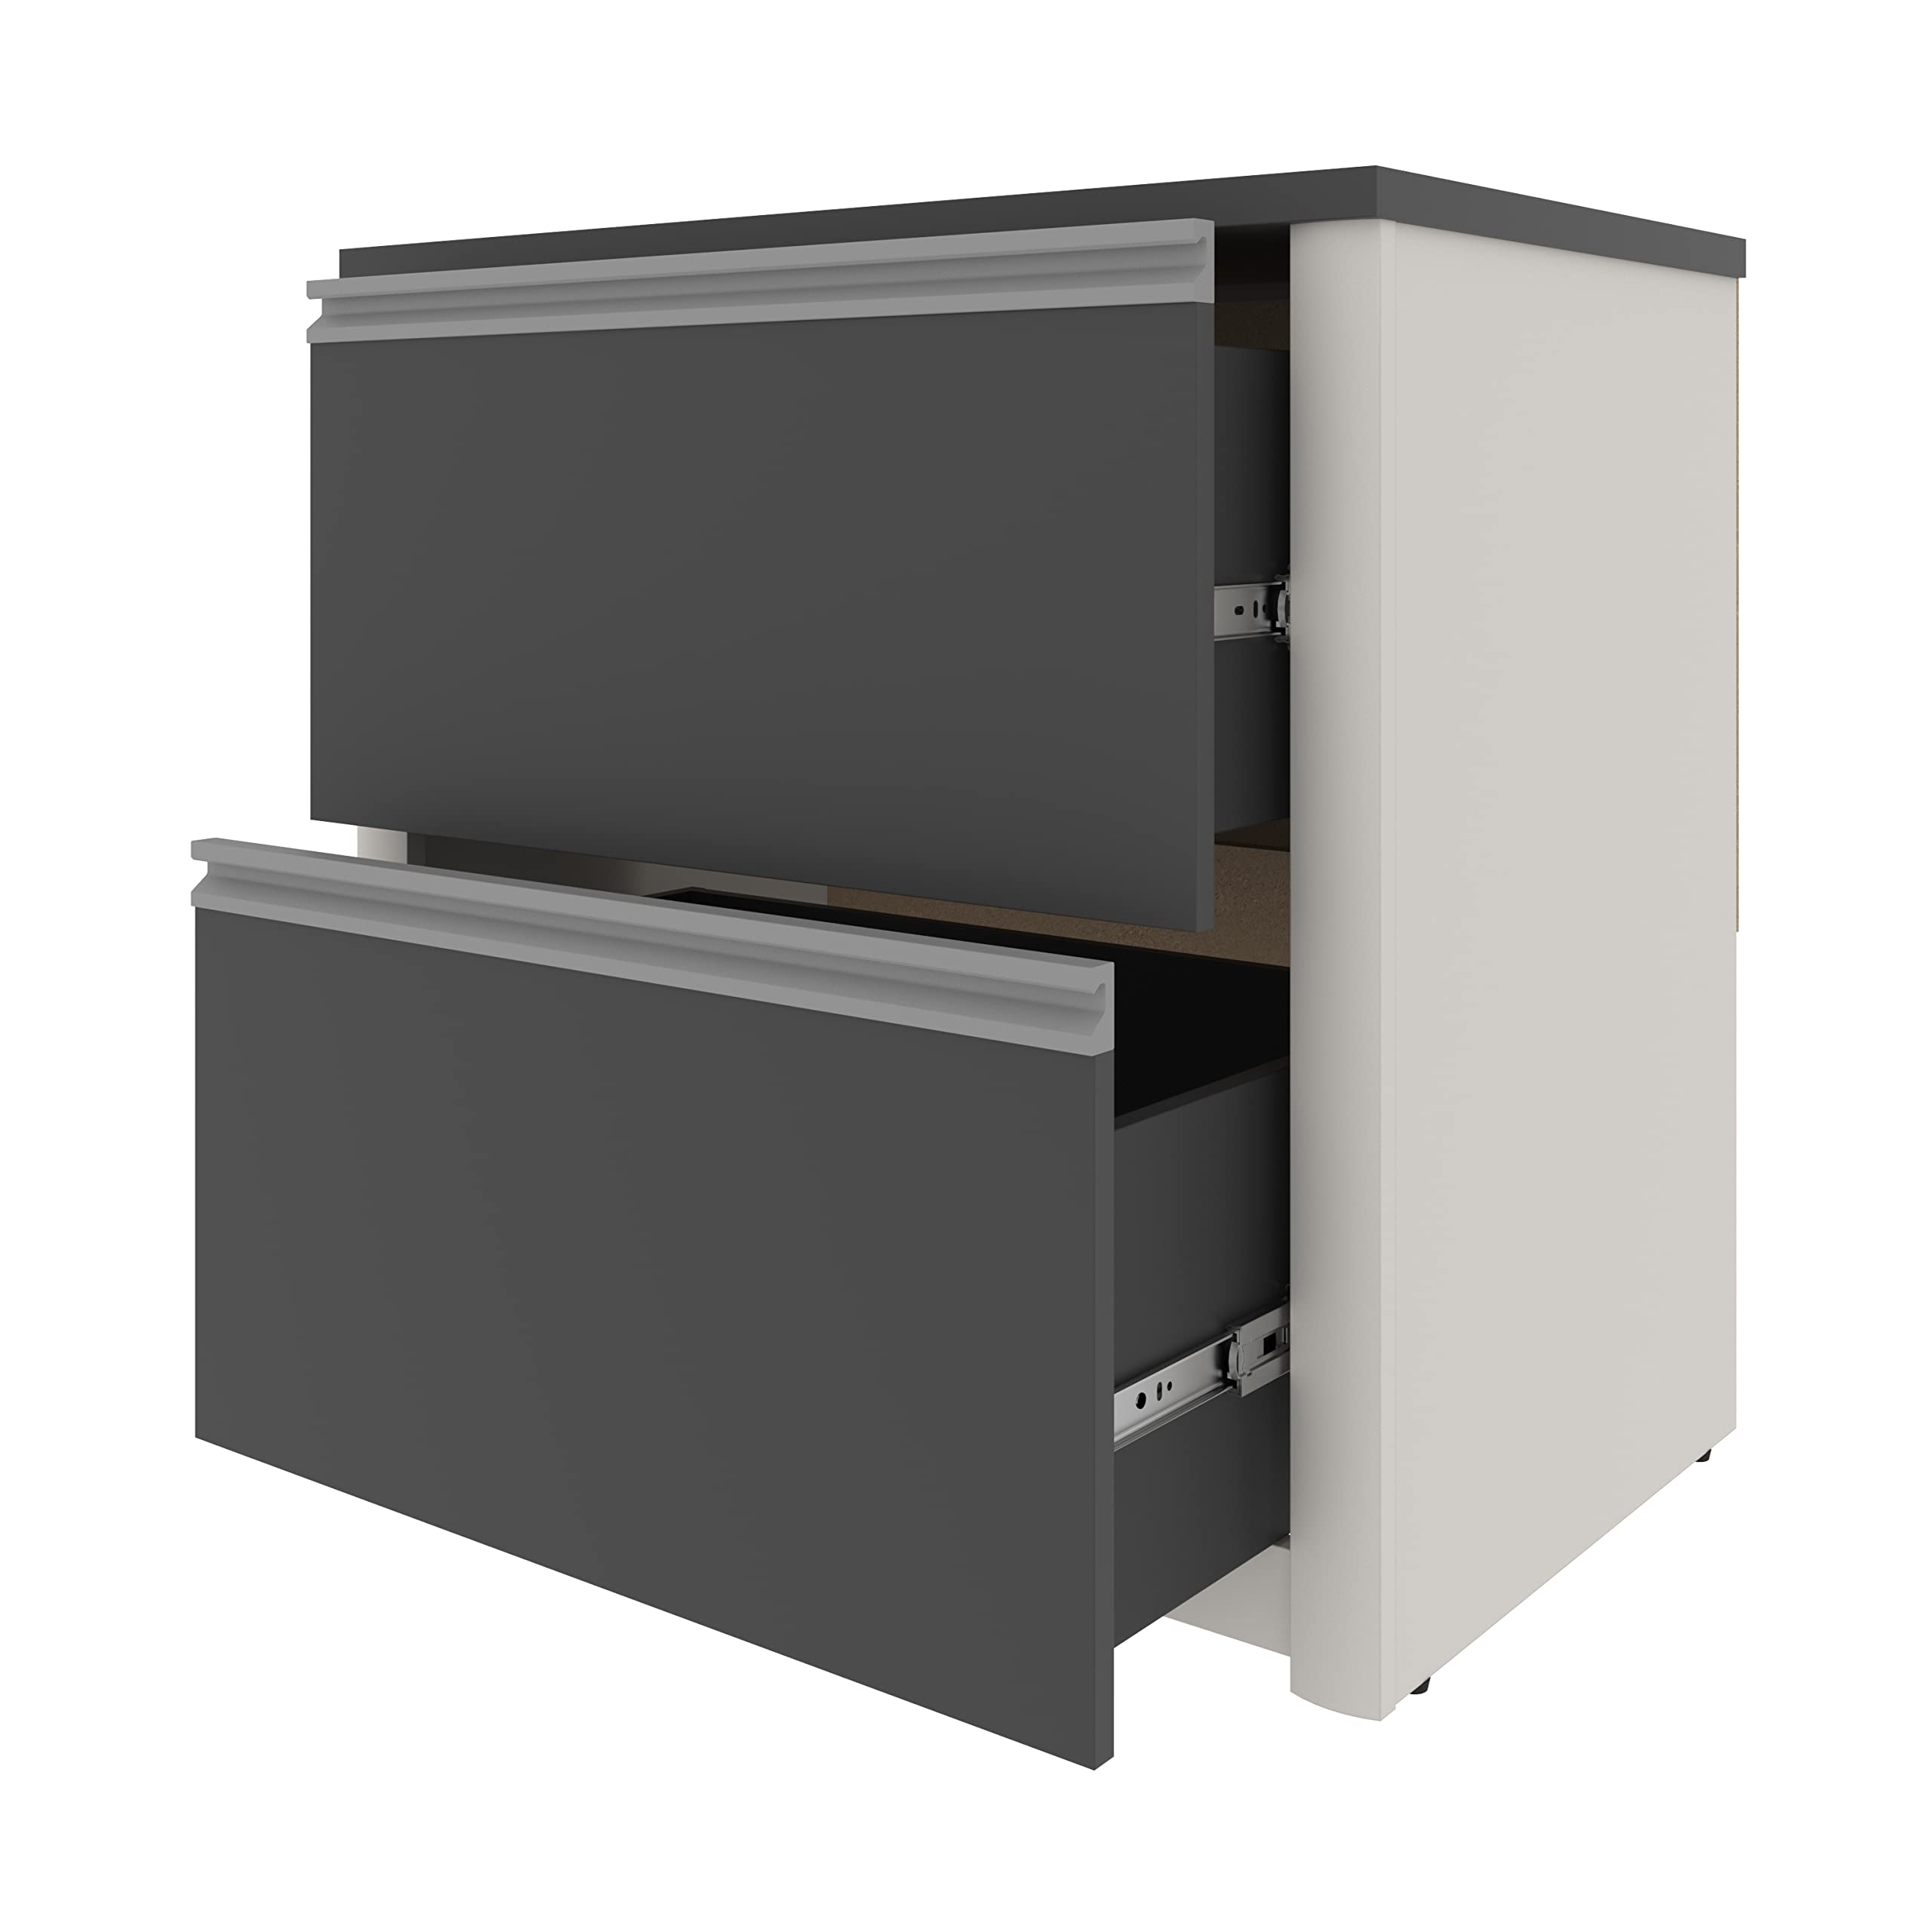 BESTAR Connexion 2 Drawer Lateral File Cabinet, 30", Slate/Sandstone